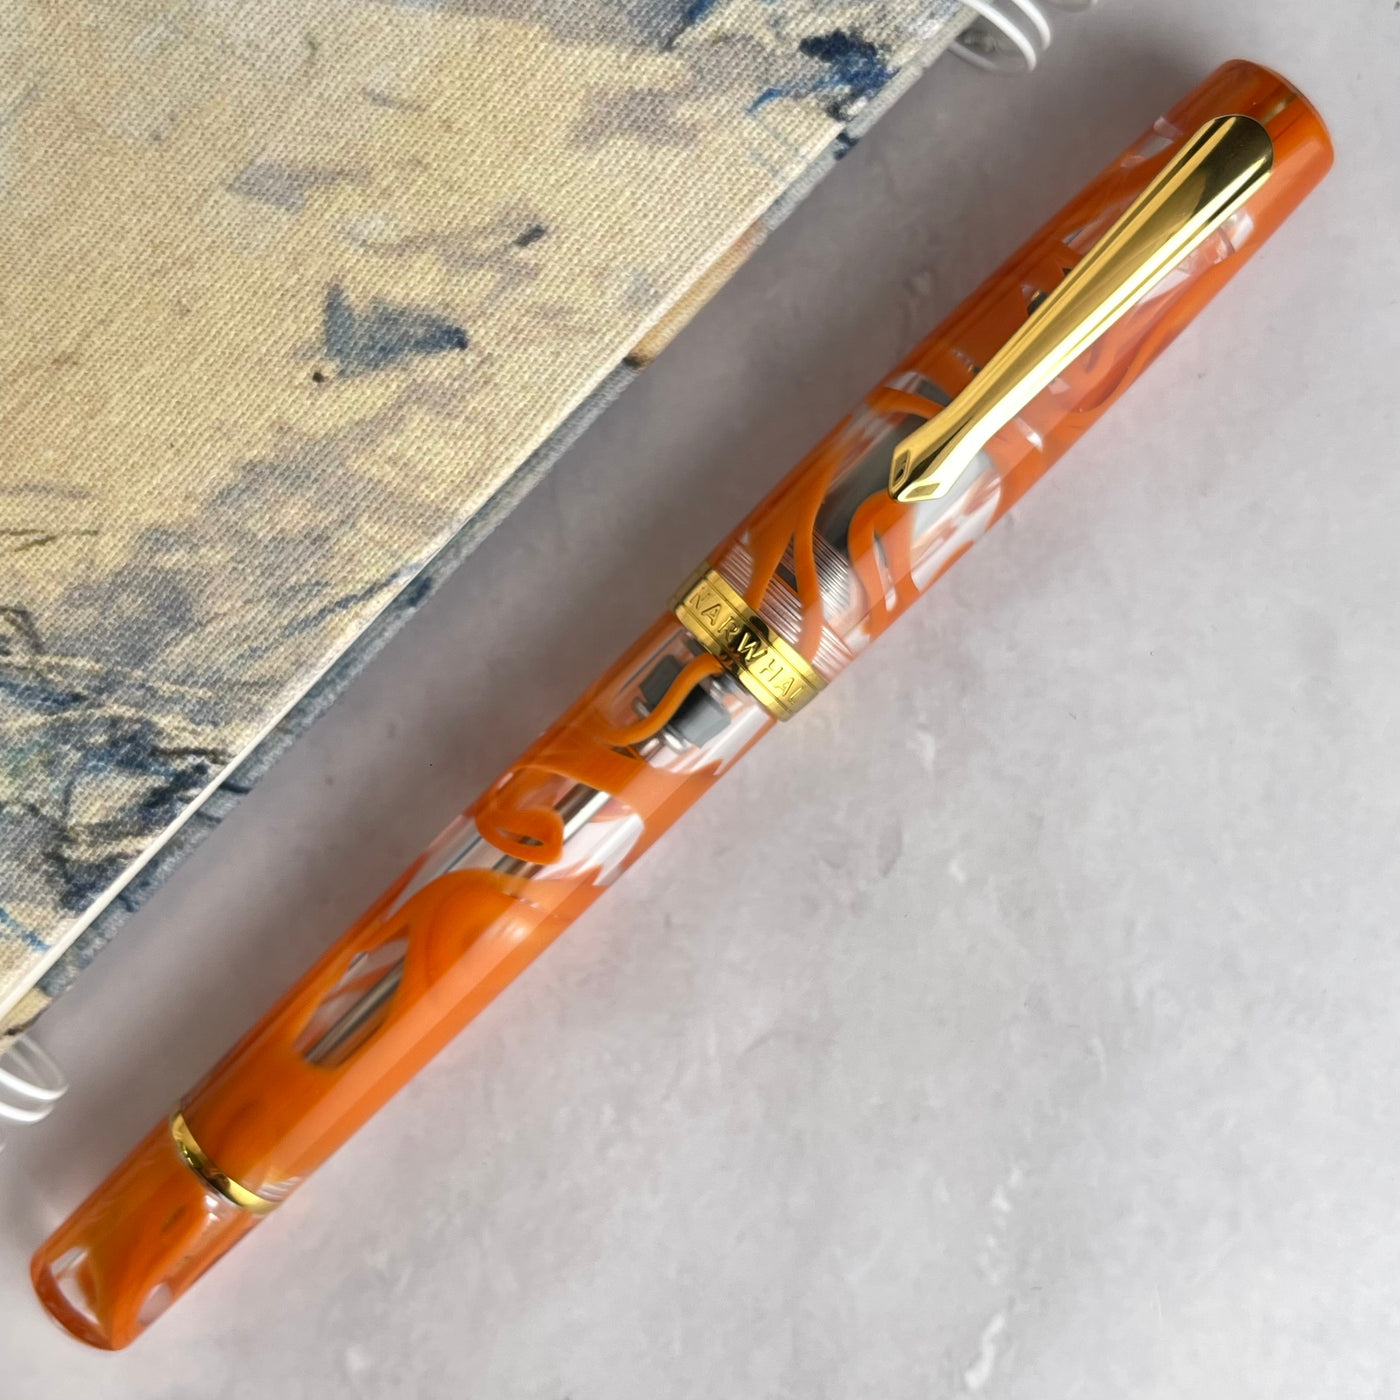 Nahvalur (Narwhal) Original Plus Fountain Pen - Garibaldi Orange